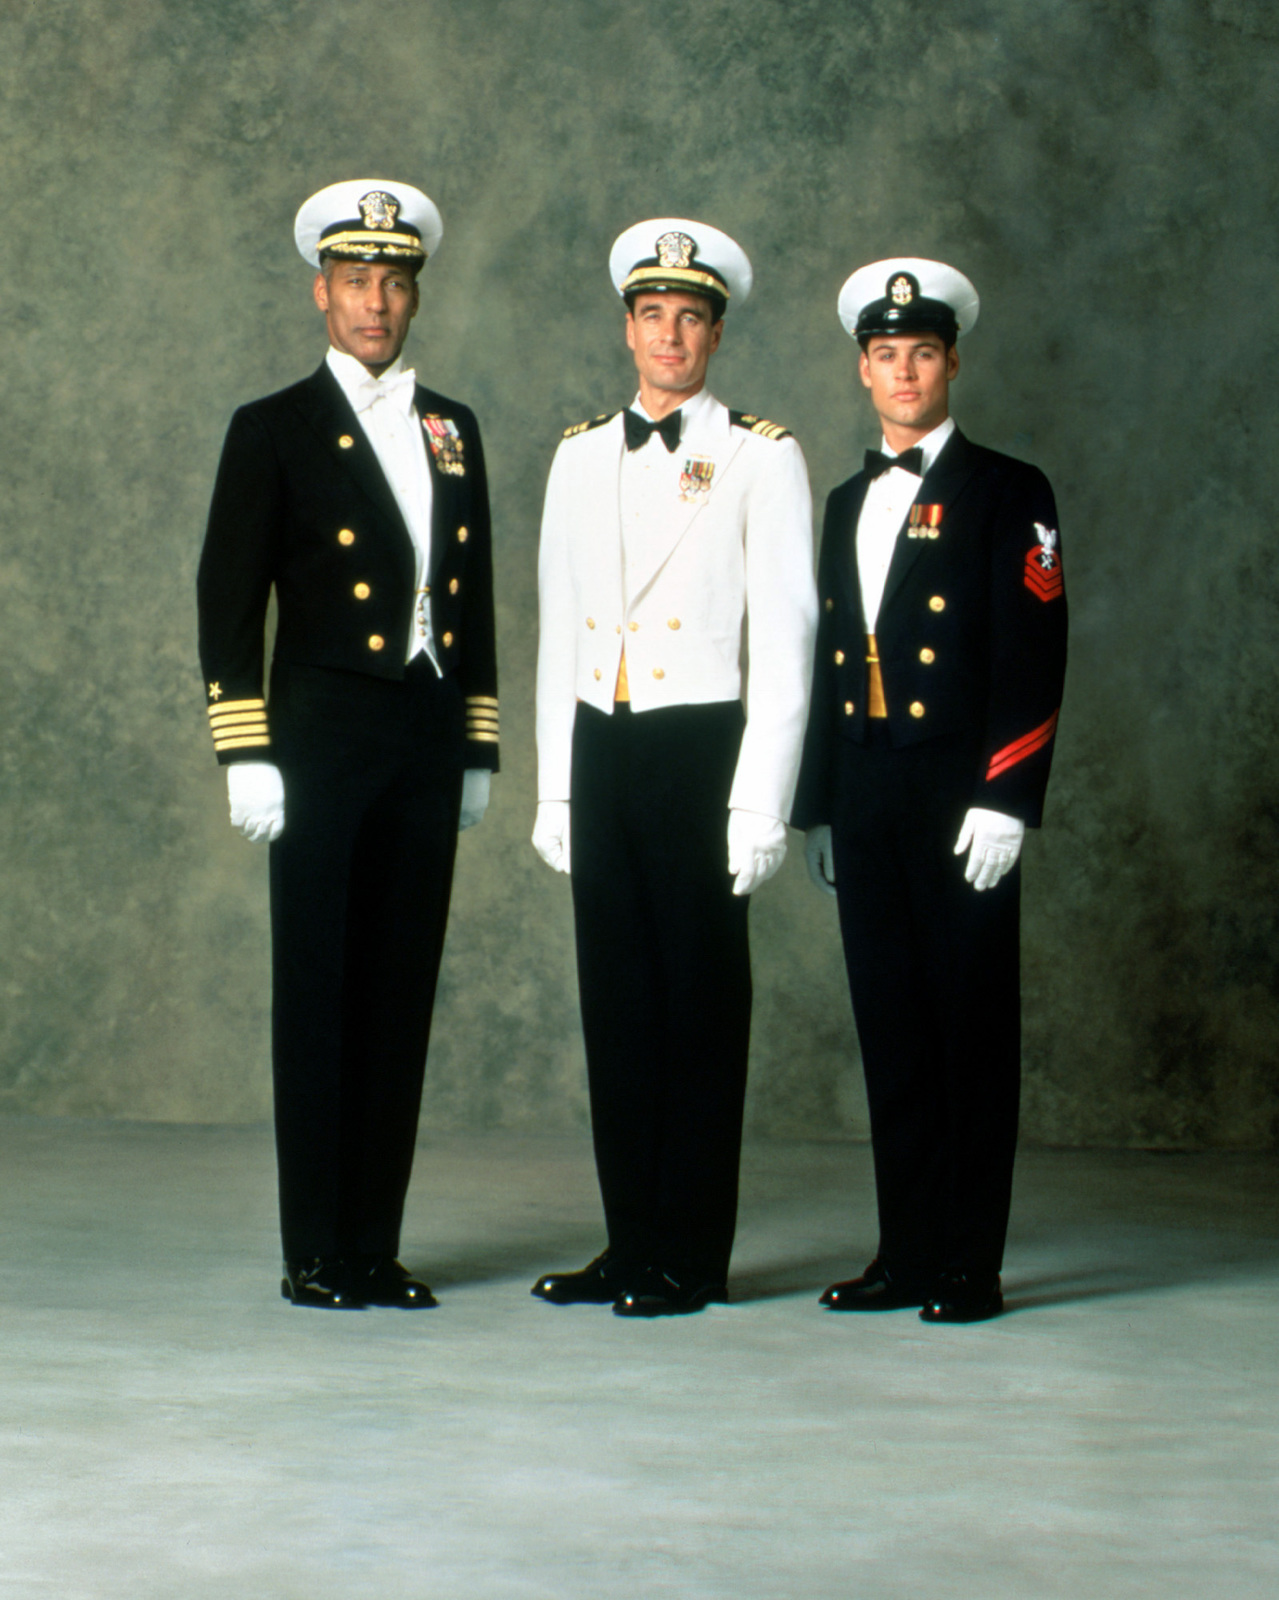 Left, men's Formal Dress uniform with 